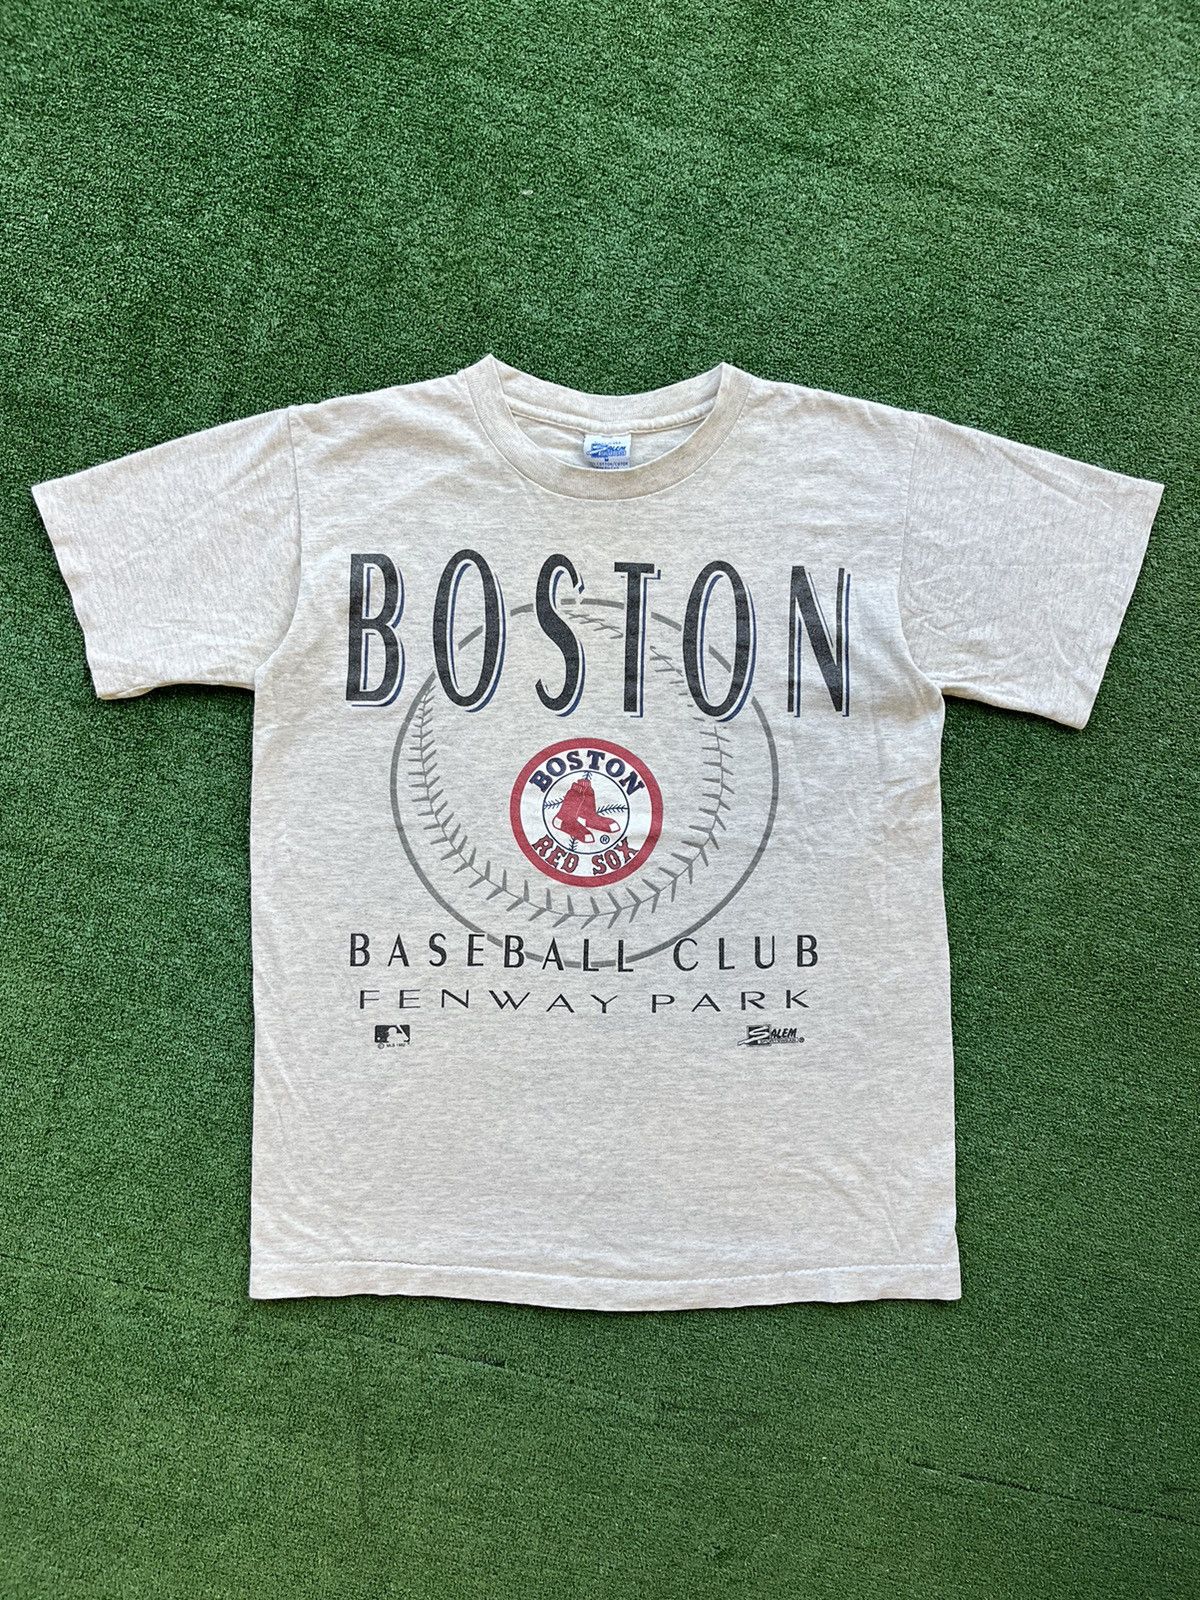 VINTAGE 1991 MADE IN USA BOSTON RED SOX MLB BASEBALL T-SHIRT SZ: M